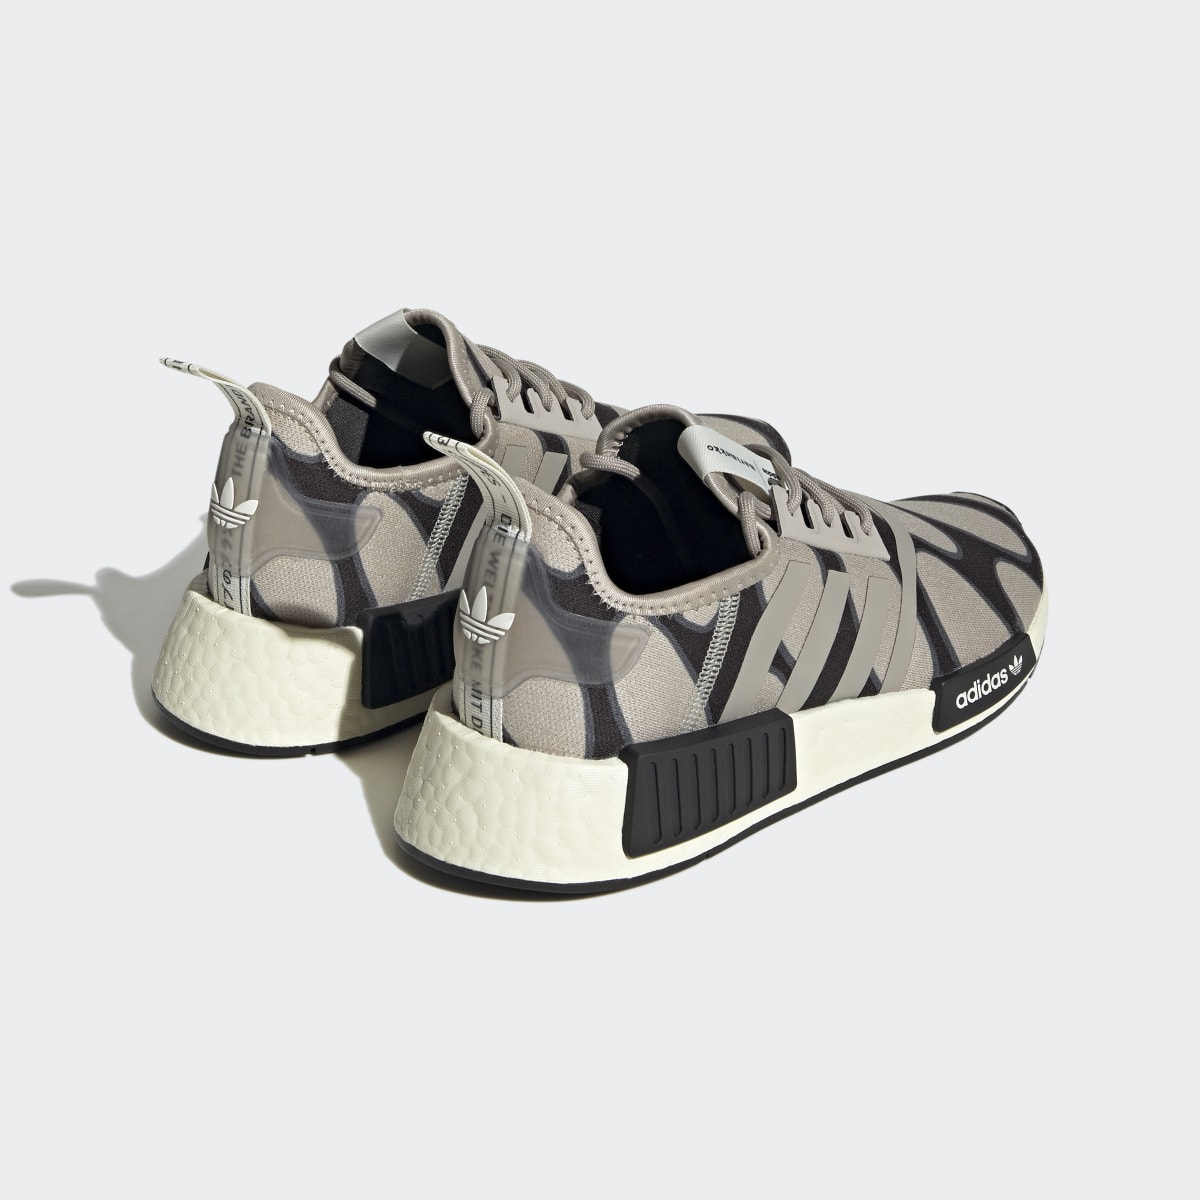 Adidas Marimekko NMD_R1 Shoes. 10